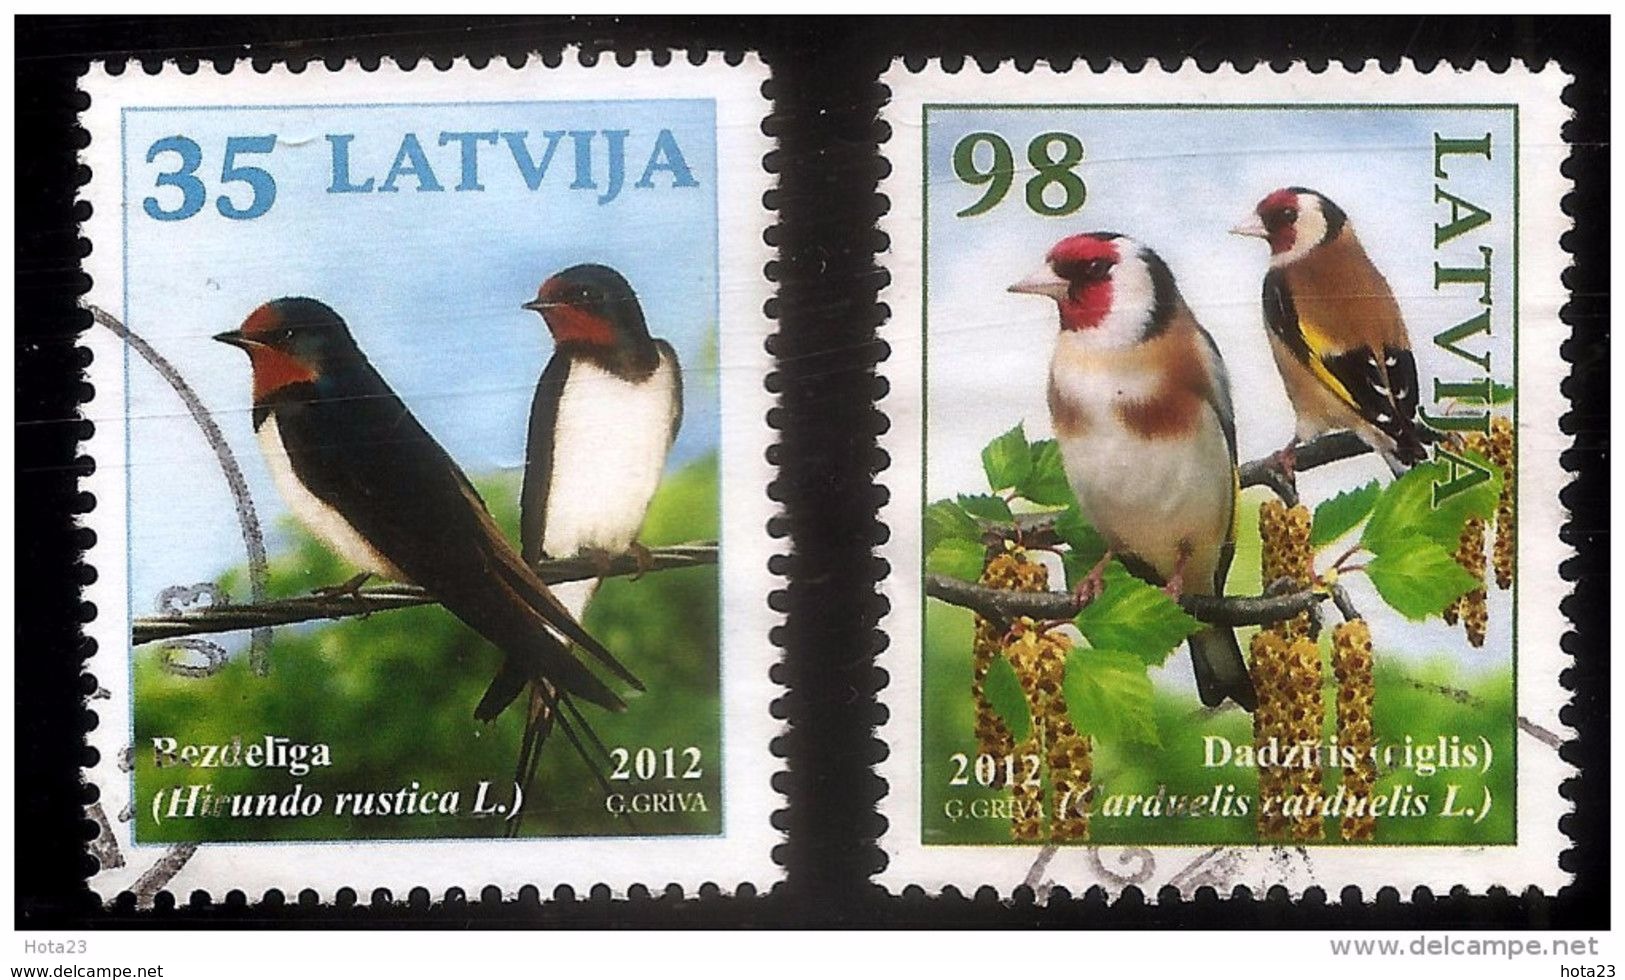 2012 Latvia / Lettonie - Bird 2012 Swallow ; GOLDFINCH  USED (0)  Full Set - Hirondelles